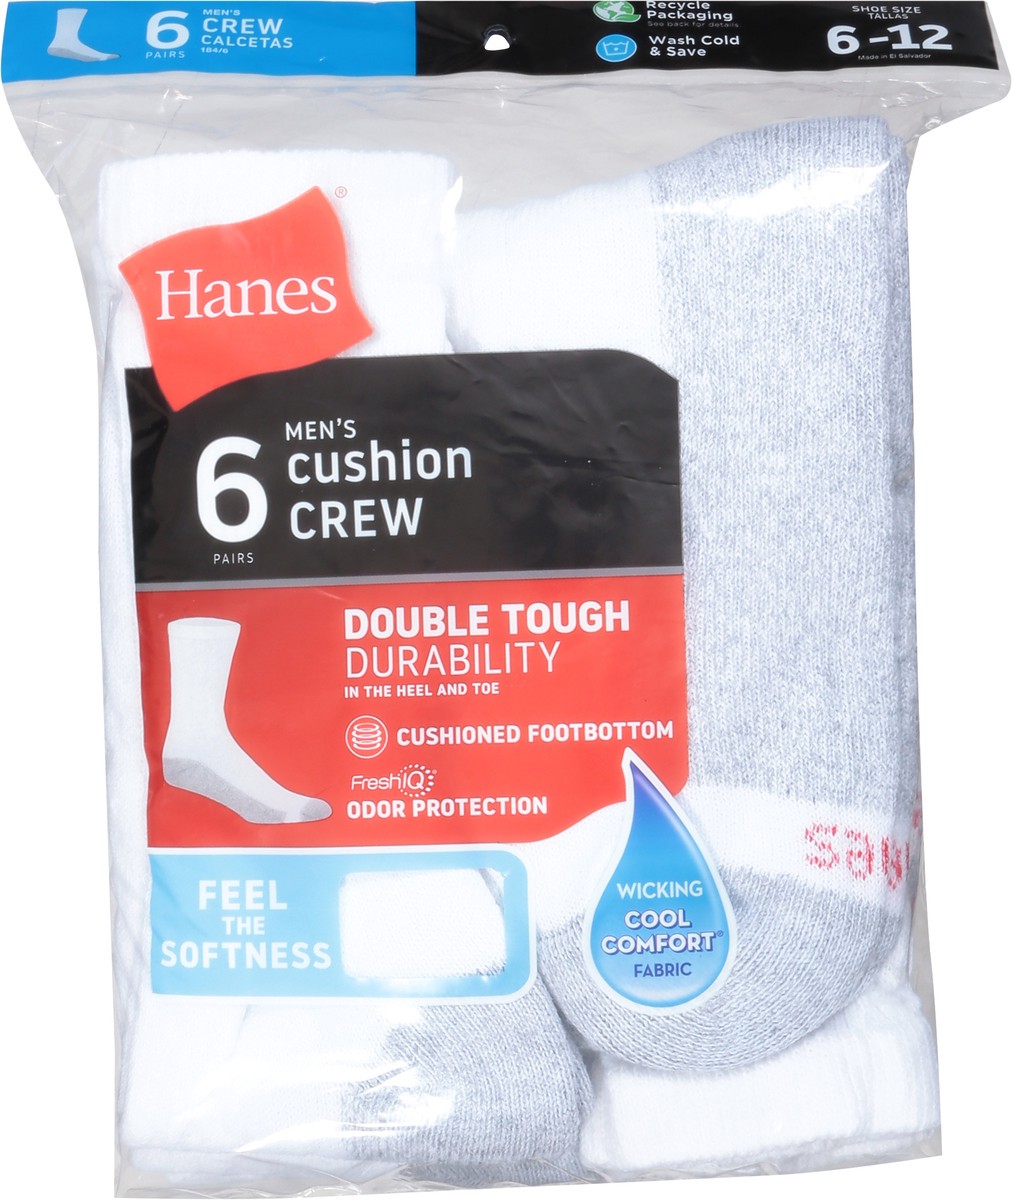 slide 7 of 9, Hanes Men's Size 6-12 Double Tough Cushion Crew Socks 6 pr, 6 ct